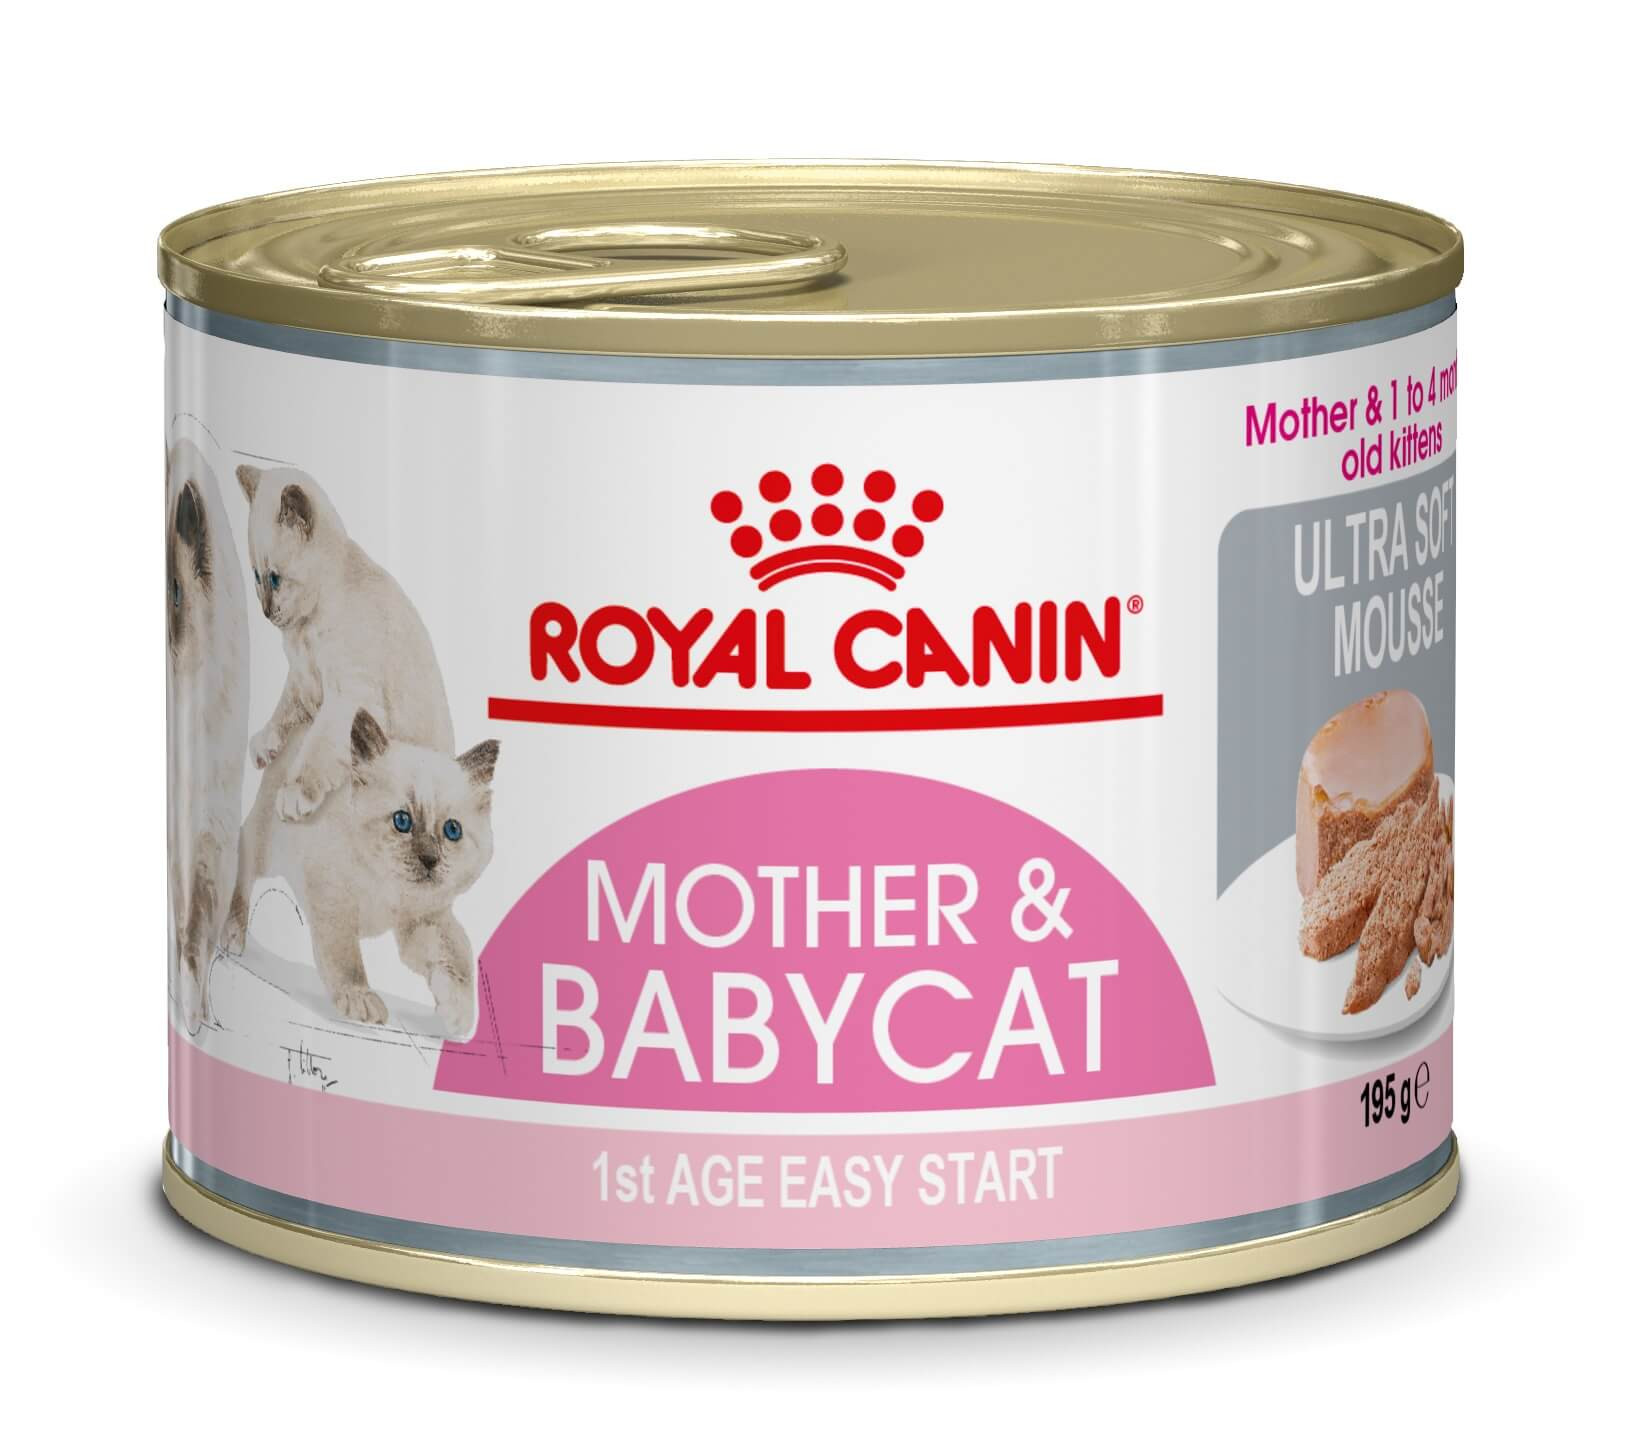 Royal Canin Babycat Instinctive Mousse Katzenfutter